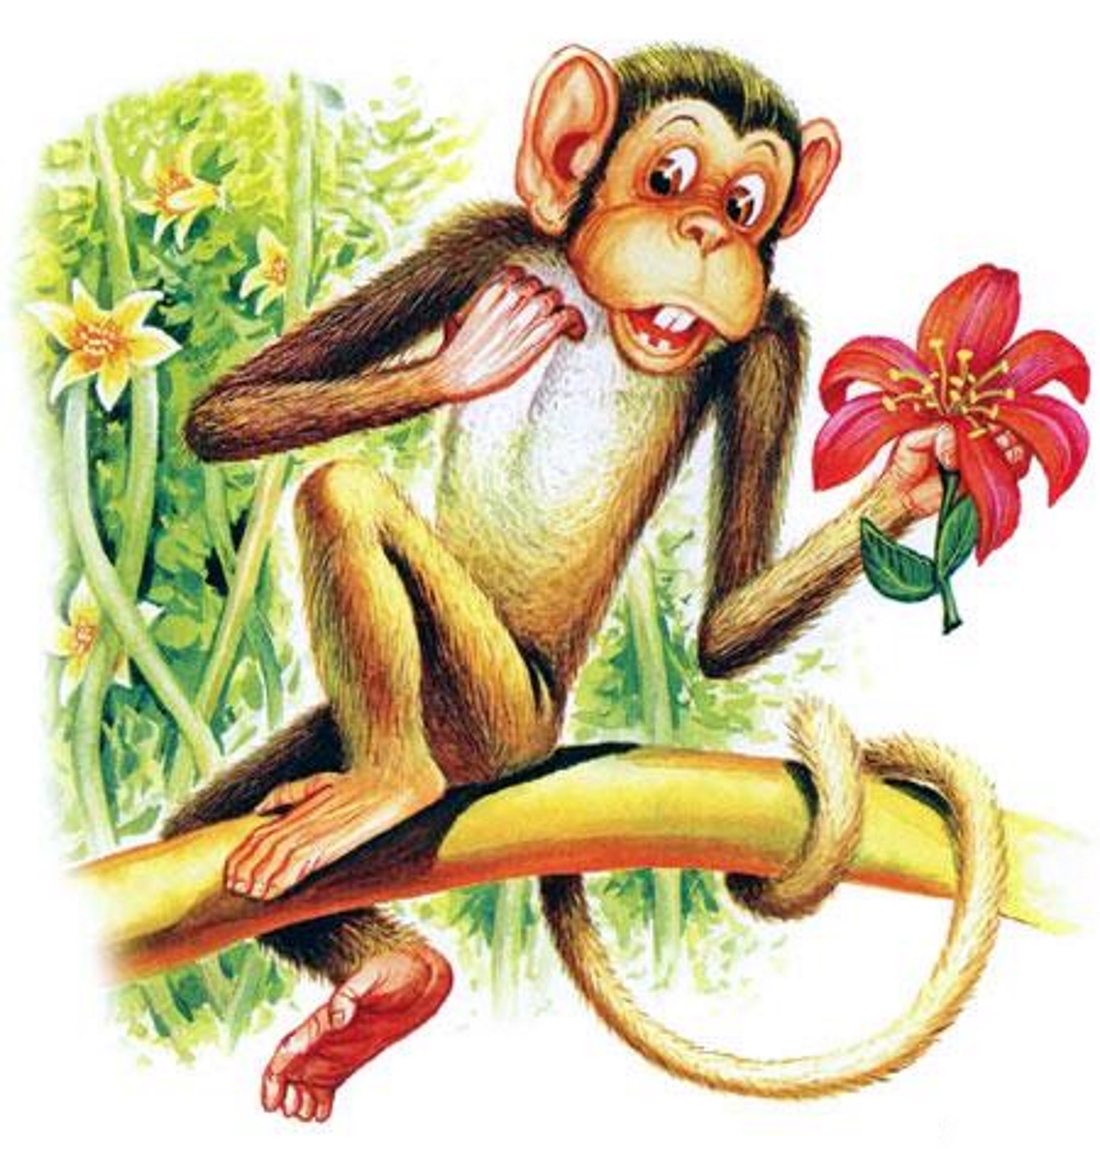 Жидков обезьян. Орис Житков «про обезьянку». Сказочная обезьянка. Иллюстрация к басне зеркало и обезьяна. Обезьяна из сказки.